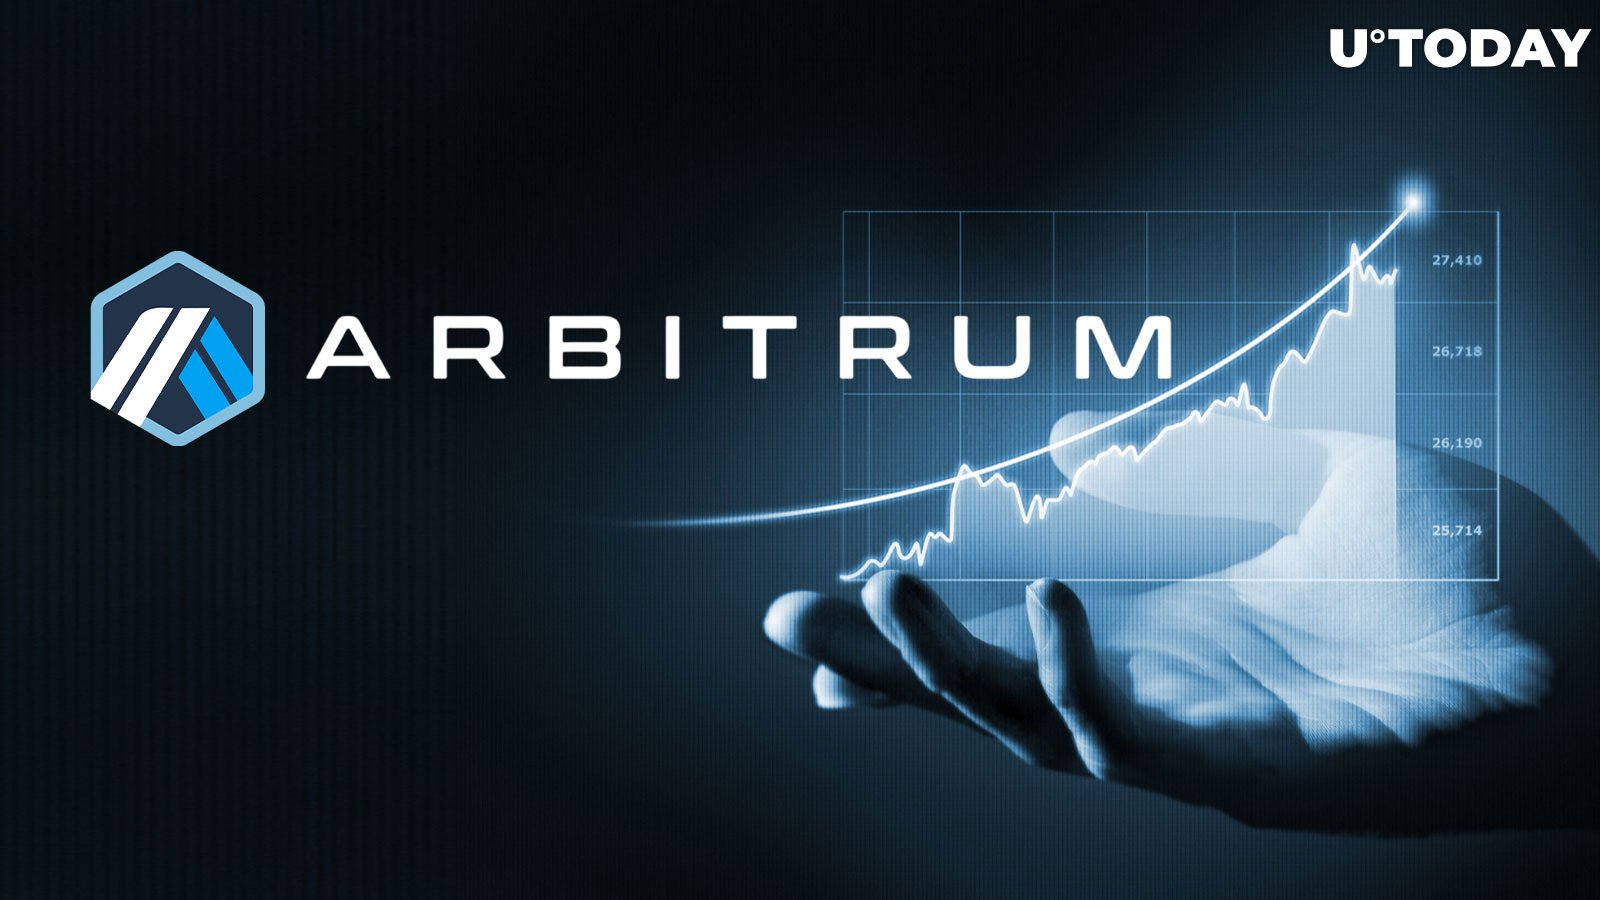 Arbitrum One Achieves Major Milestone With $10.32 Billion TVL, ARB Token Gains Momentum